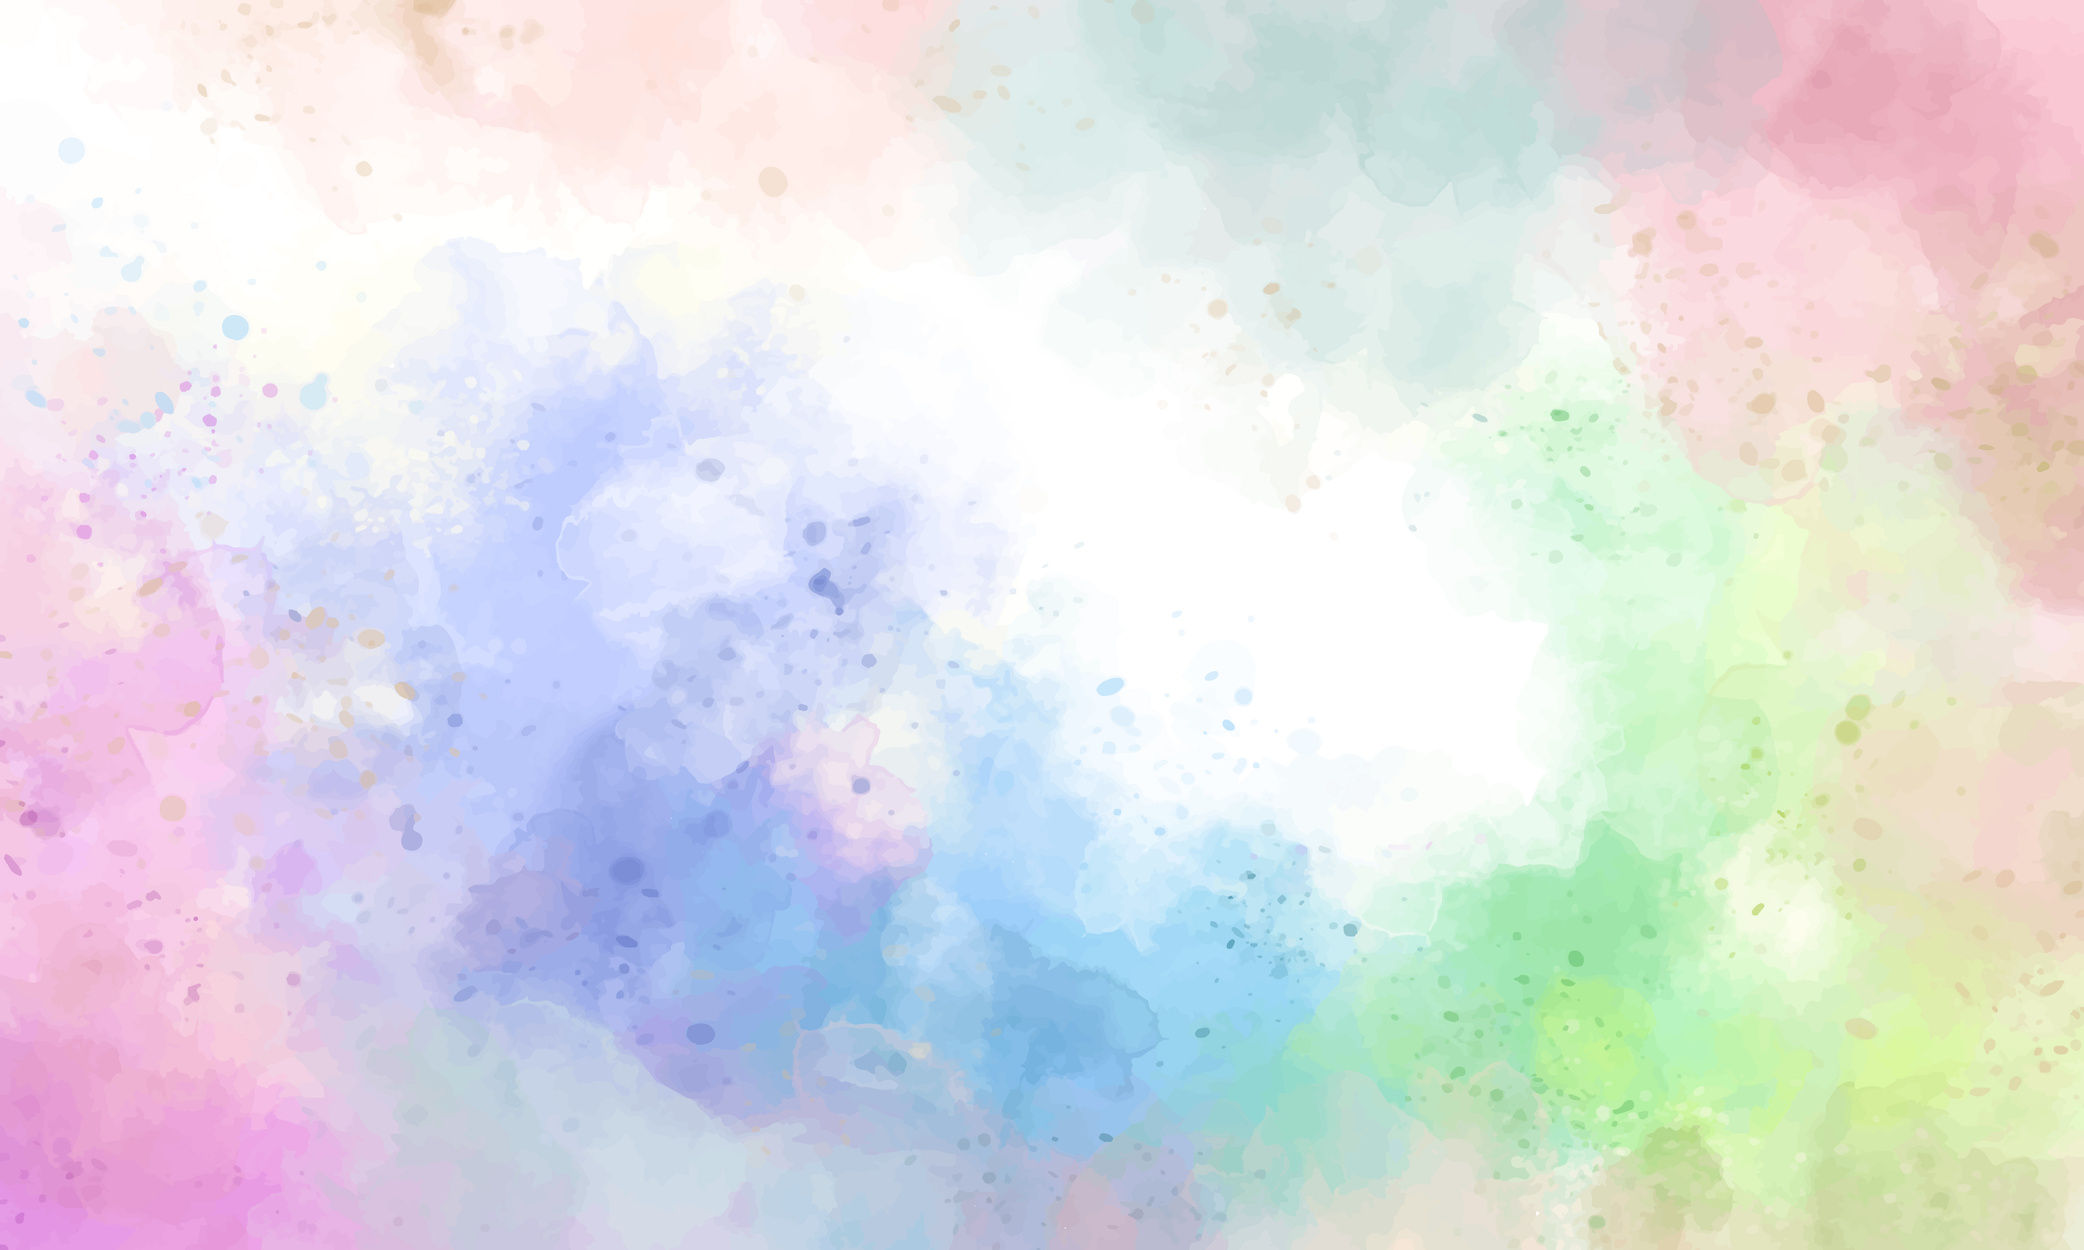 Rainbow of stain splash watercolor background